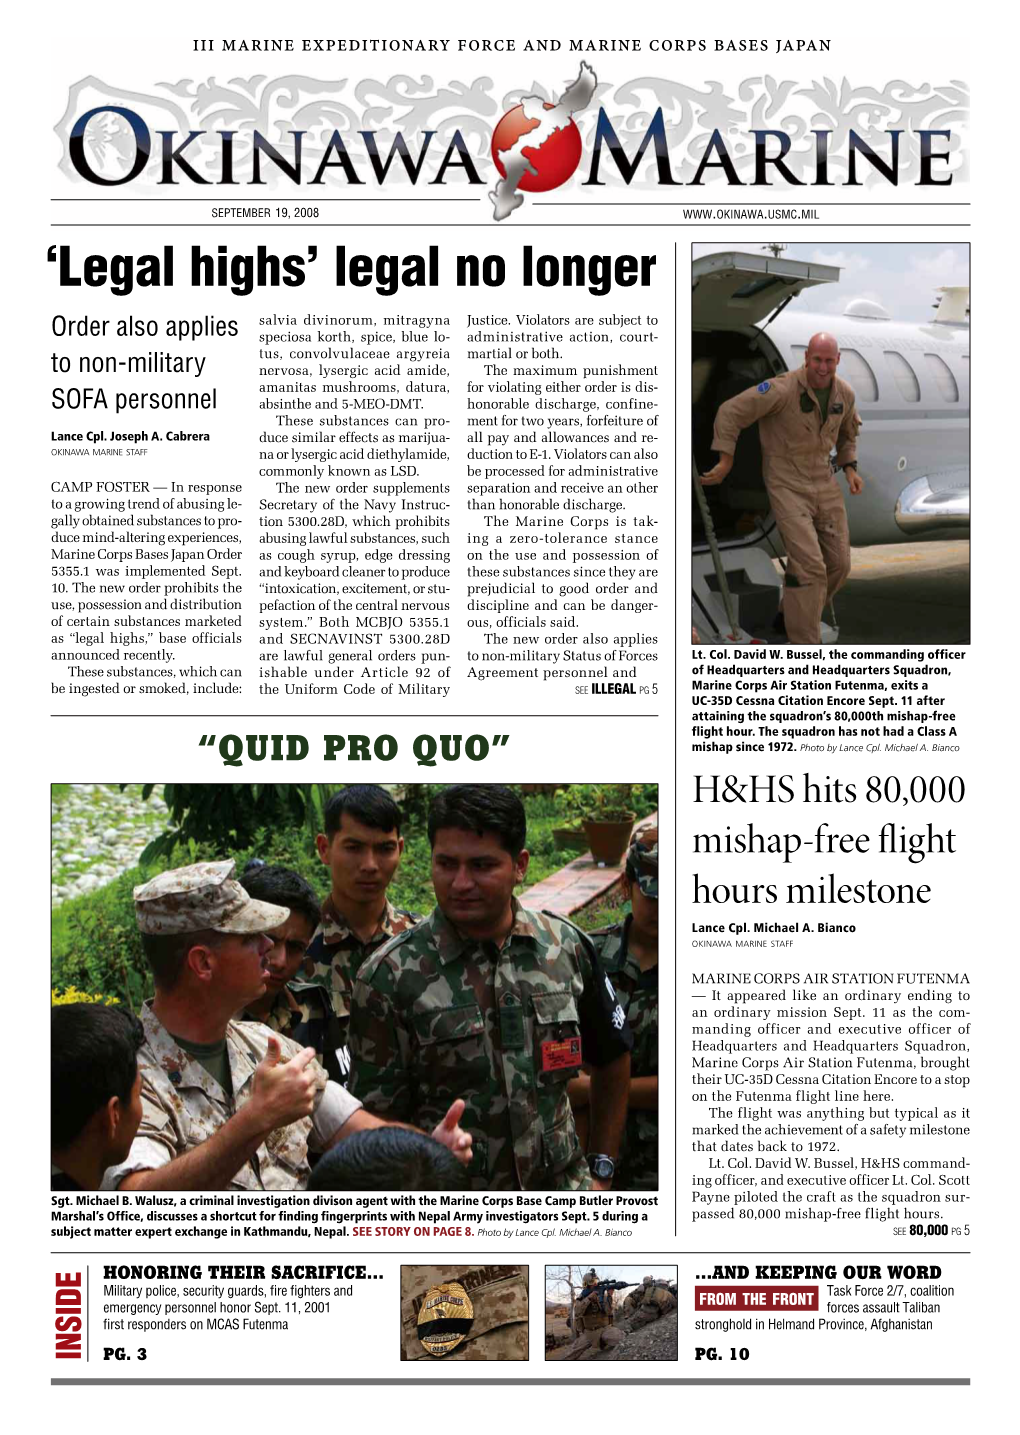 Legal Highs’ Legal No Longer